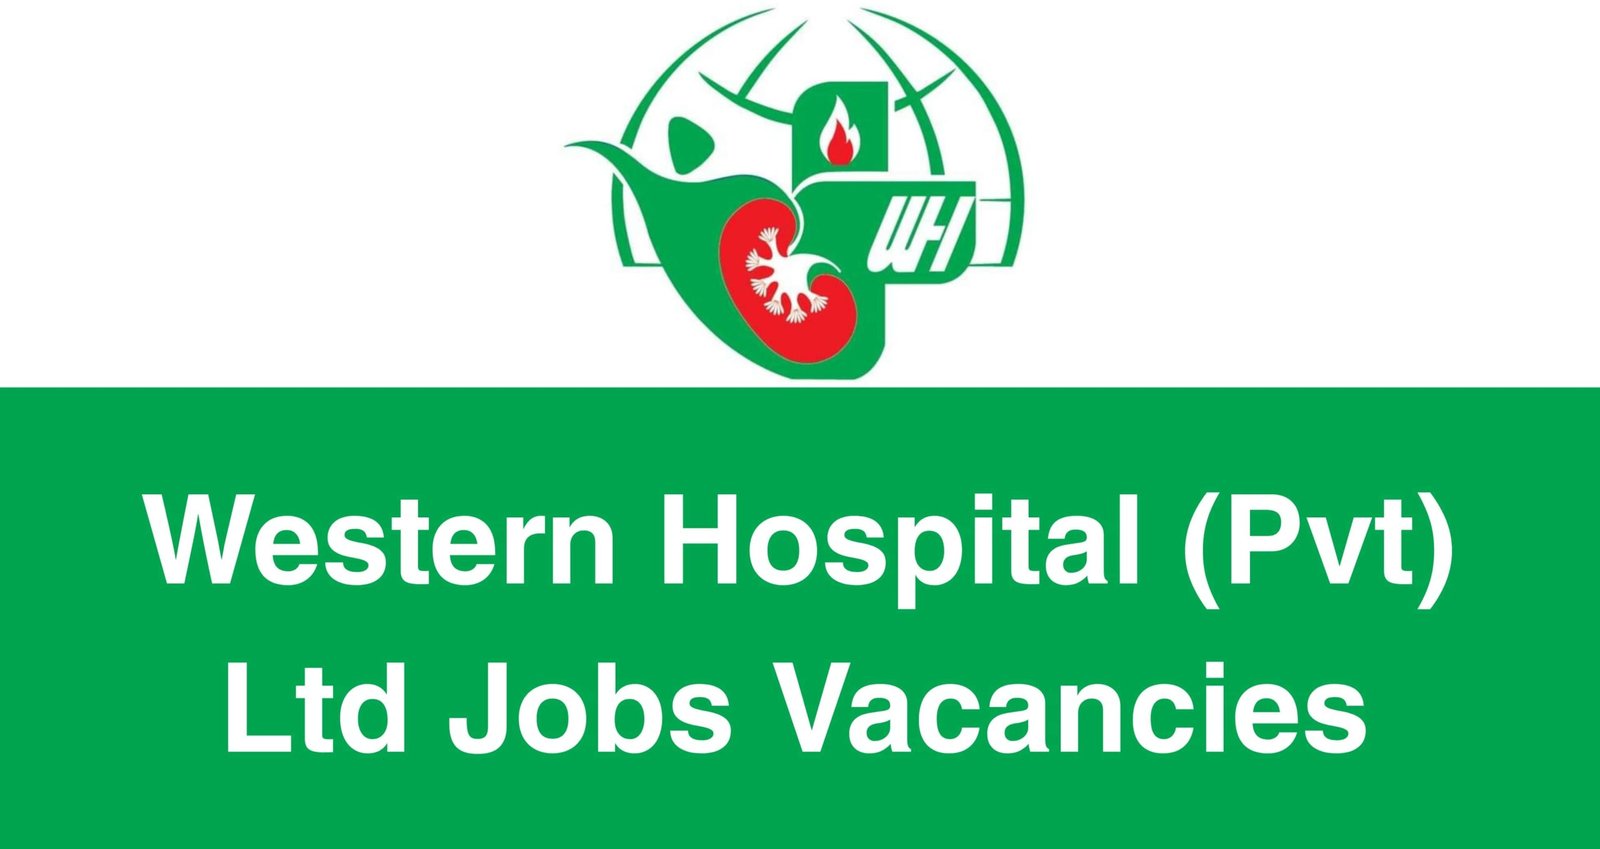 Western Hospital (Pvt) Ltd Jobs Vacancies